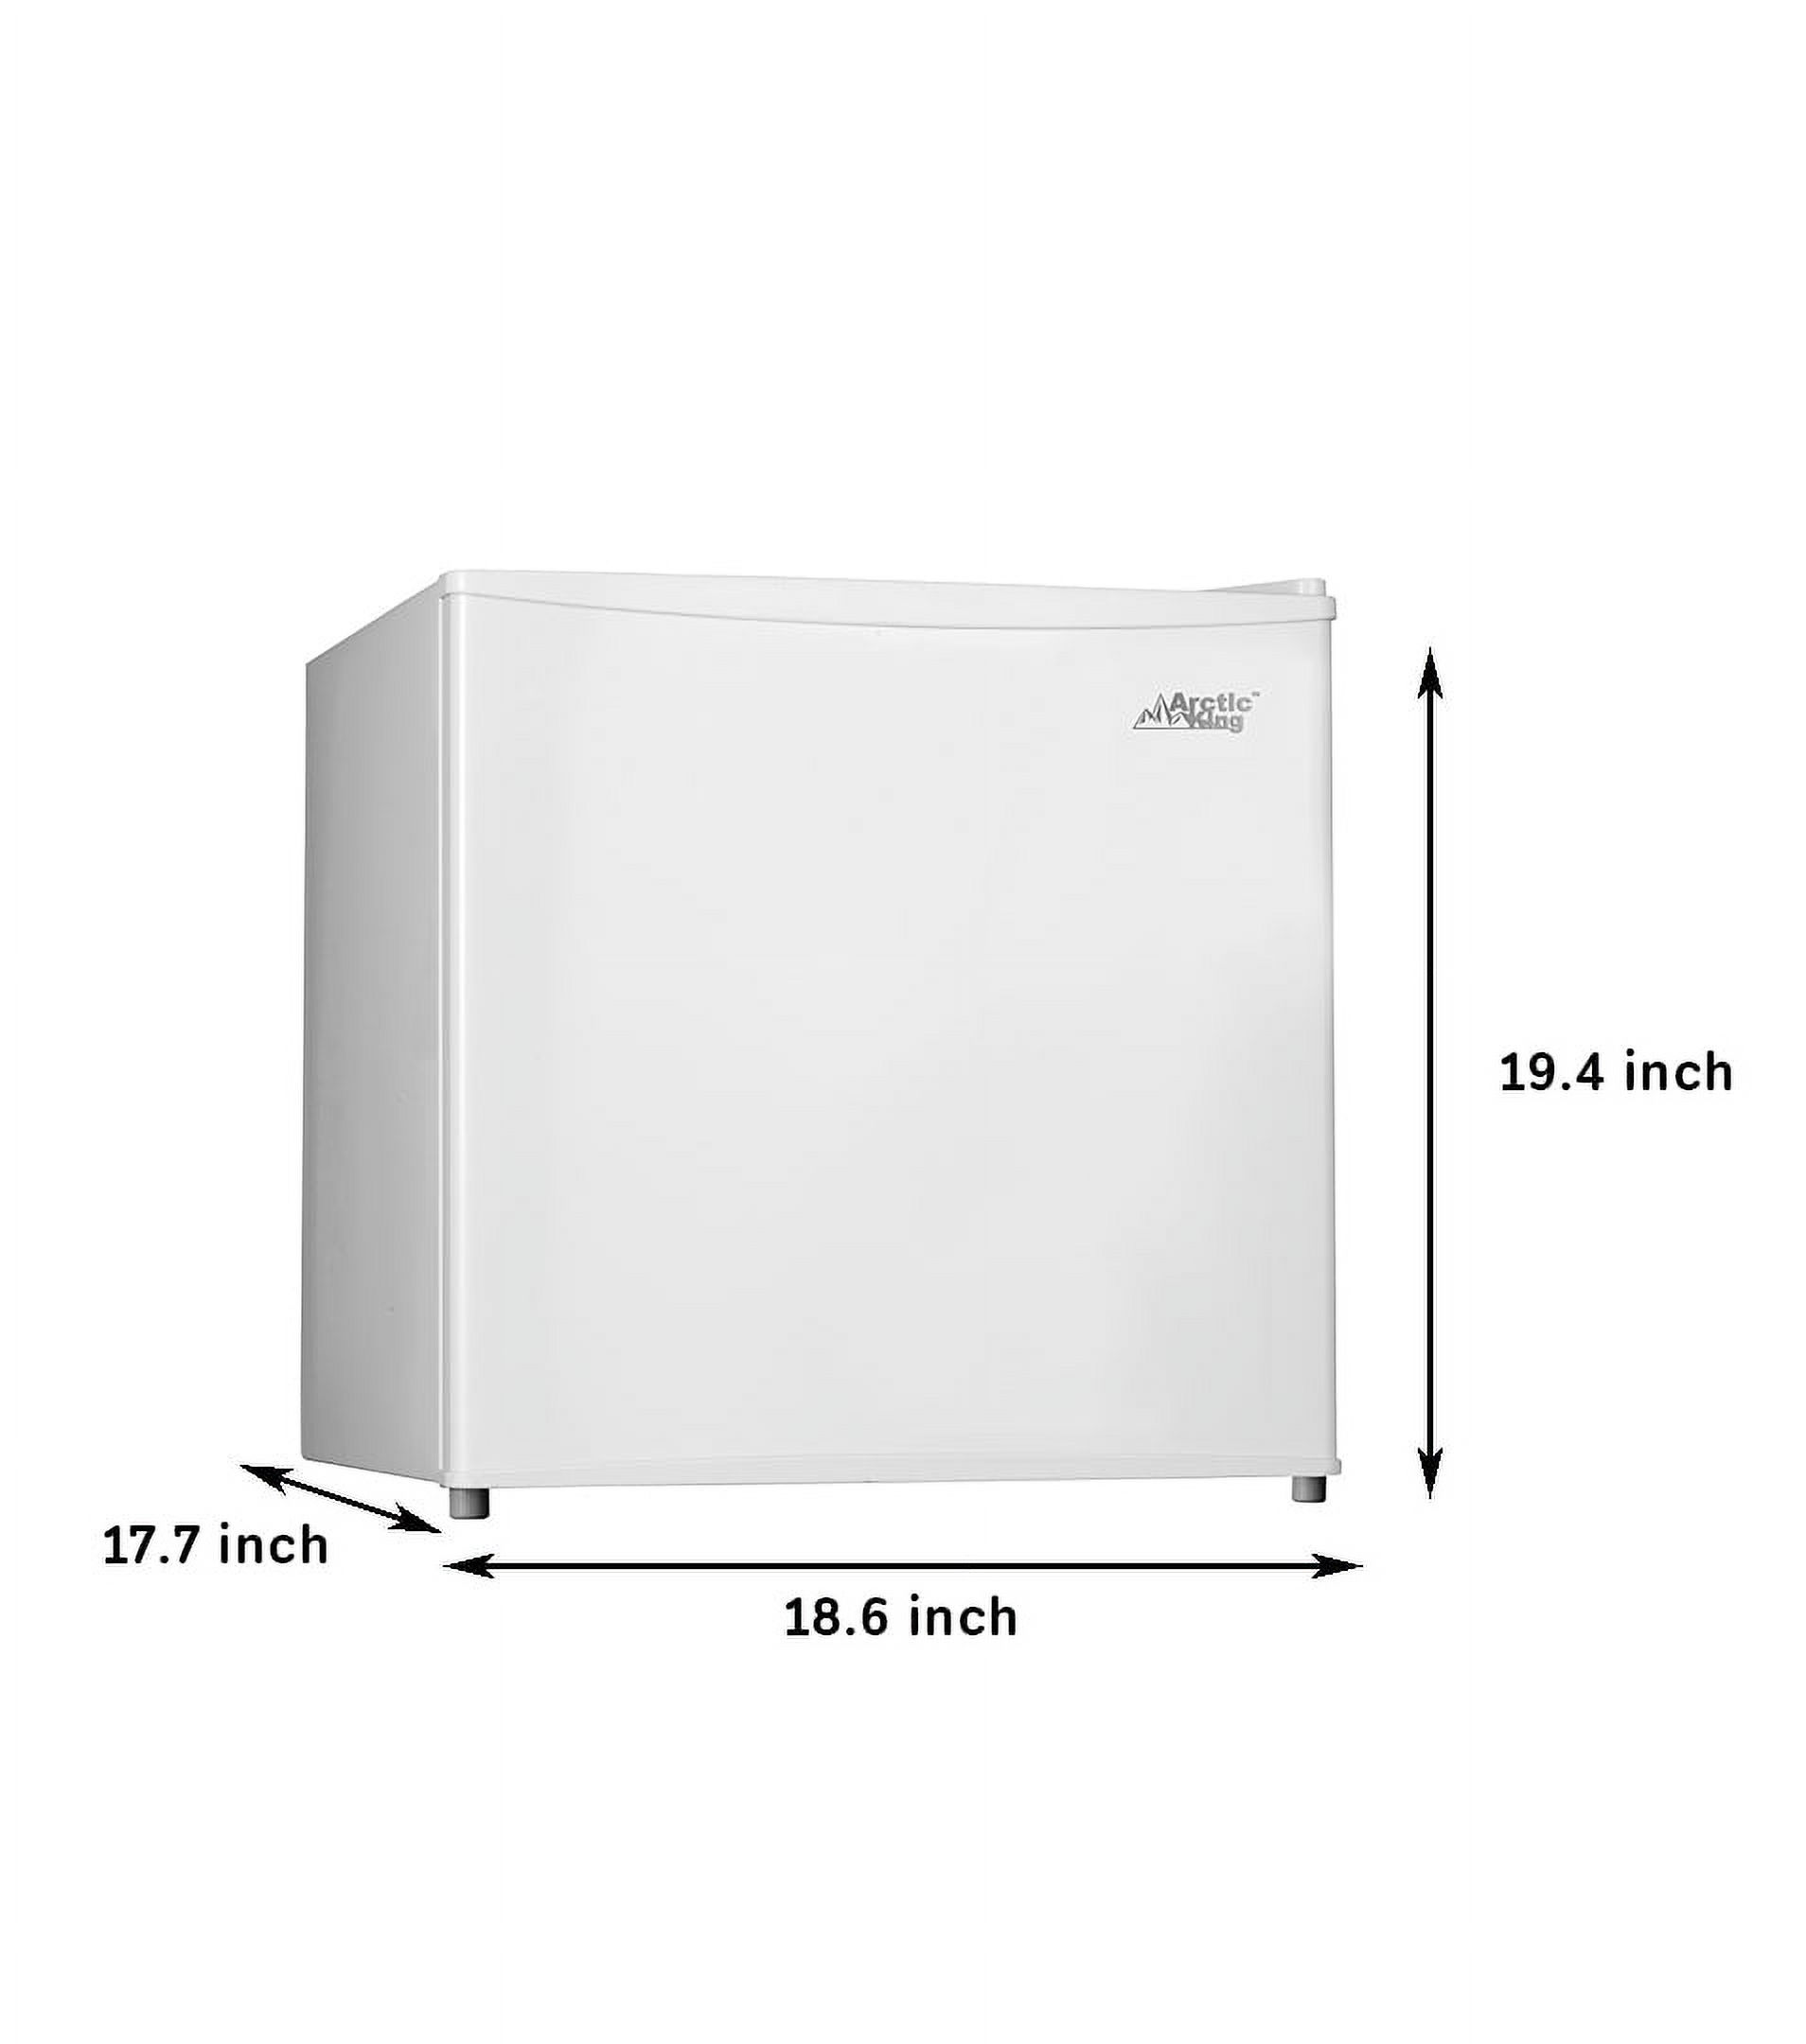 Arctic King 1.1 Cu ft Upright Freezer, White, AUFM011AEW - image 2 of 7